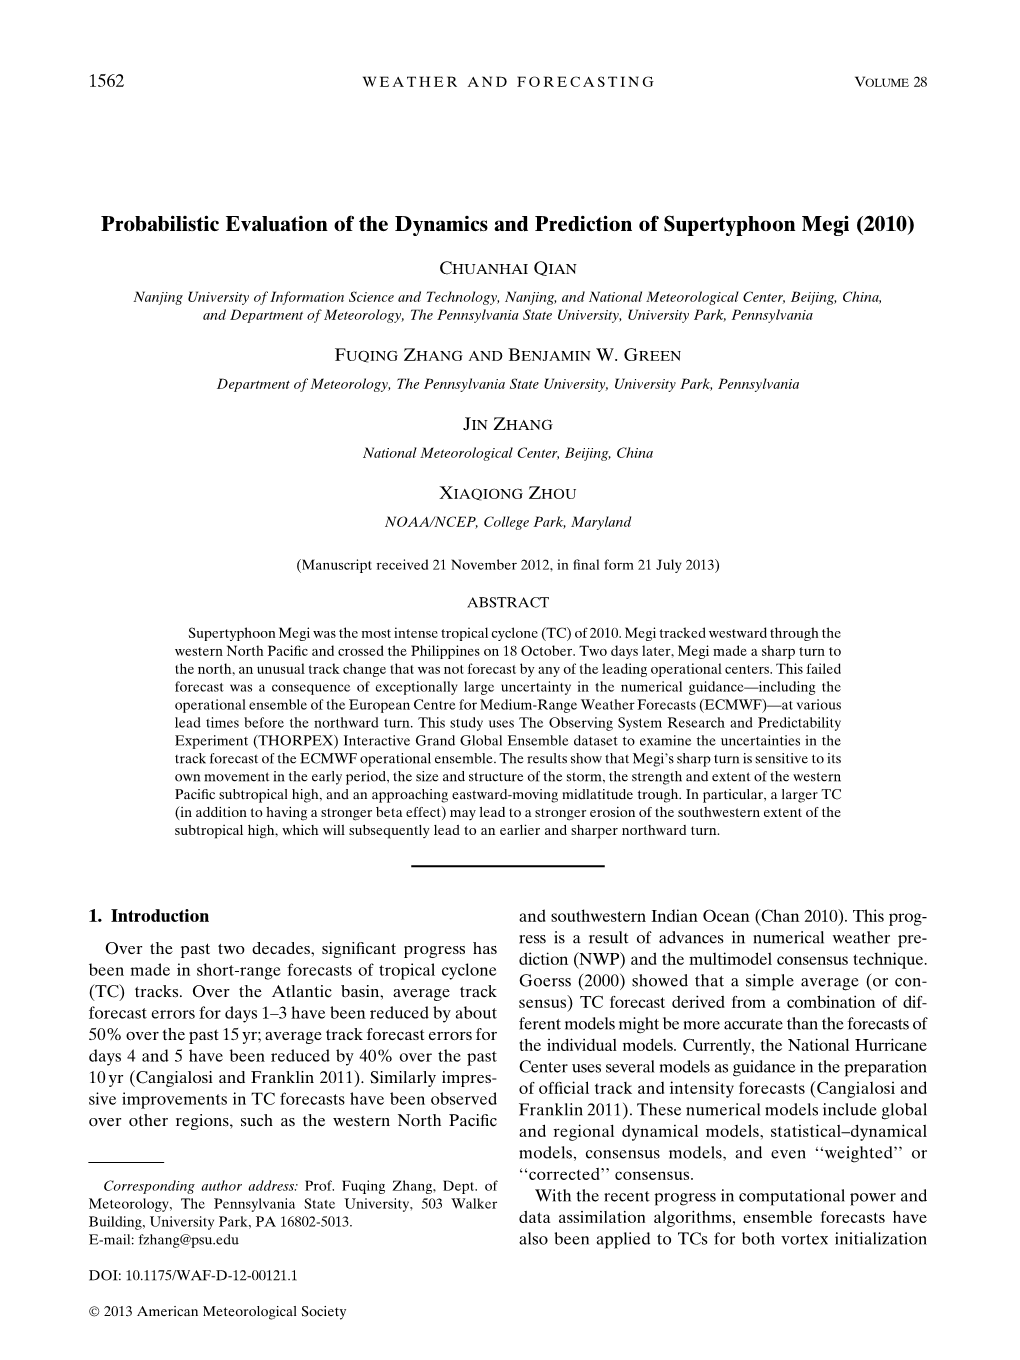 Probabilistic Evaluation of the Dynamics and Prediction of Supertyphoon Megi (2010)